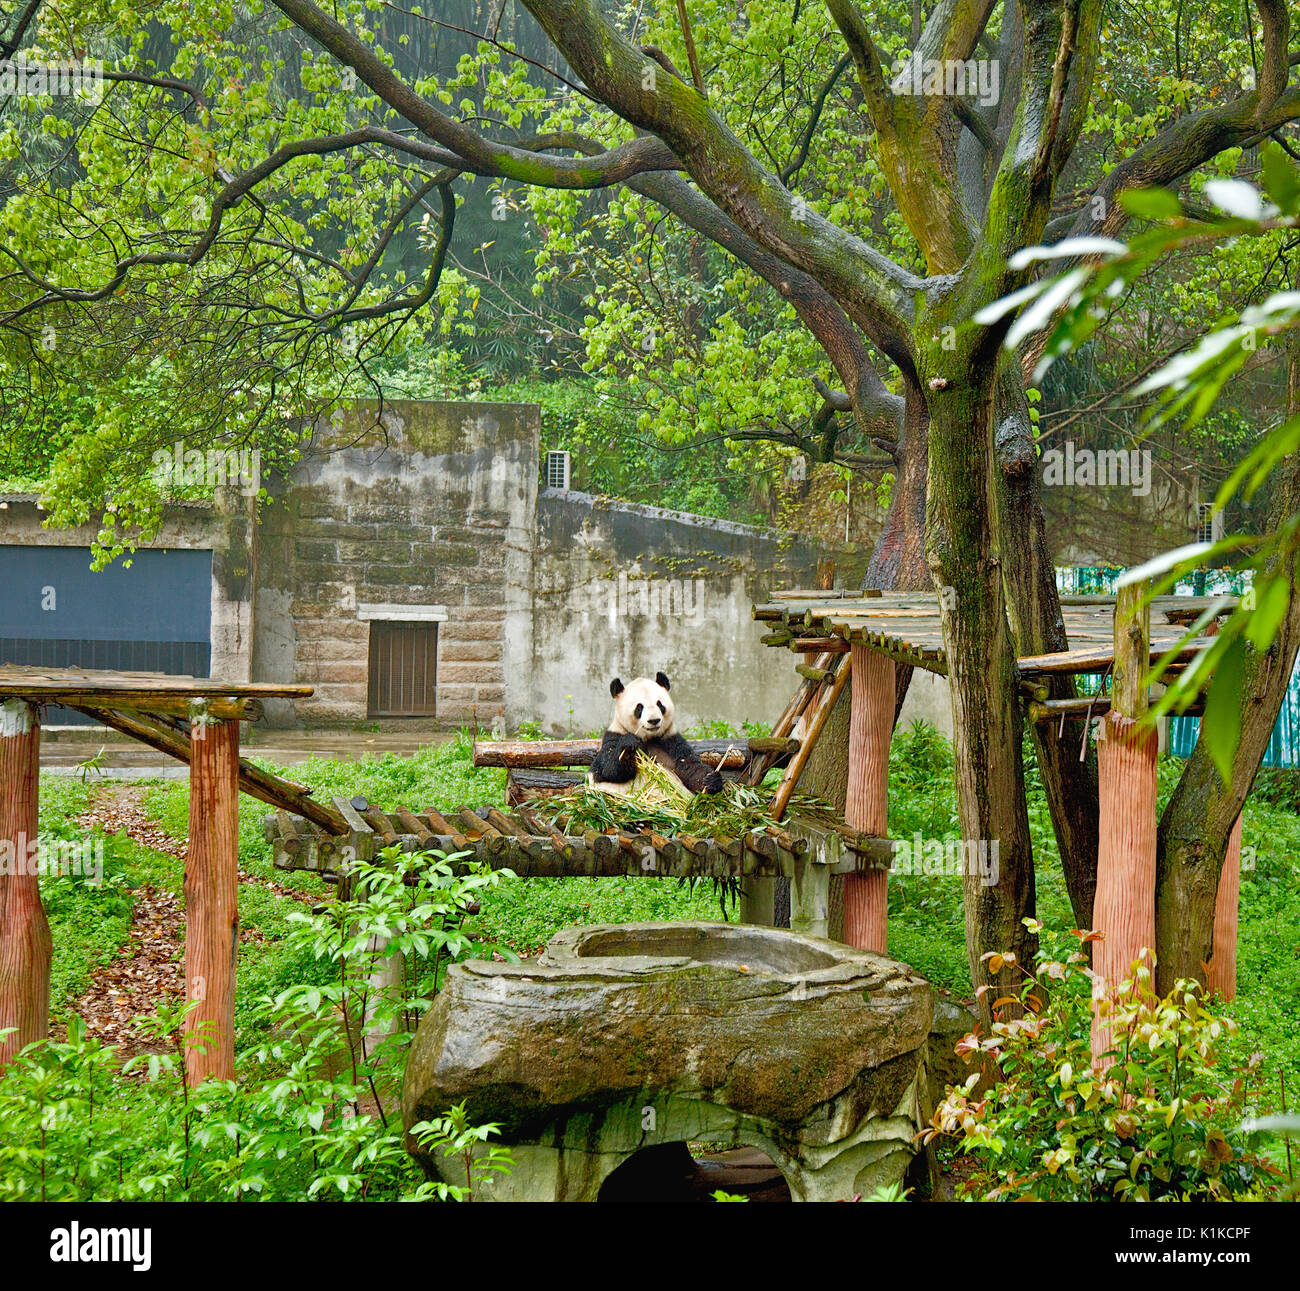 Giant Panda, Chongqing Zoo, China. Name is Xin Xing (New Star), 35 years old. Stock Photo